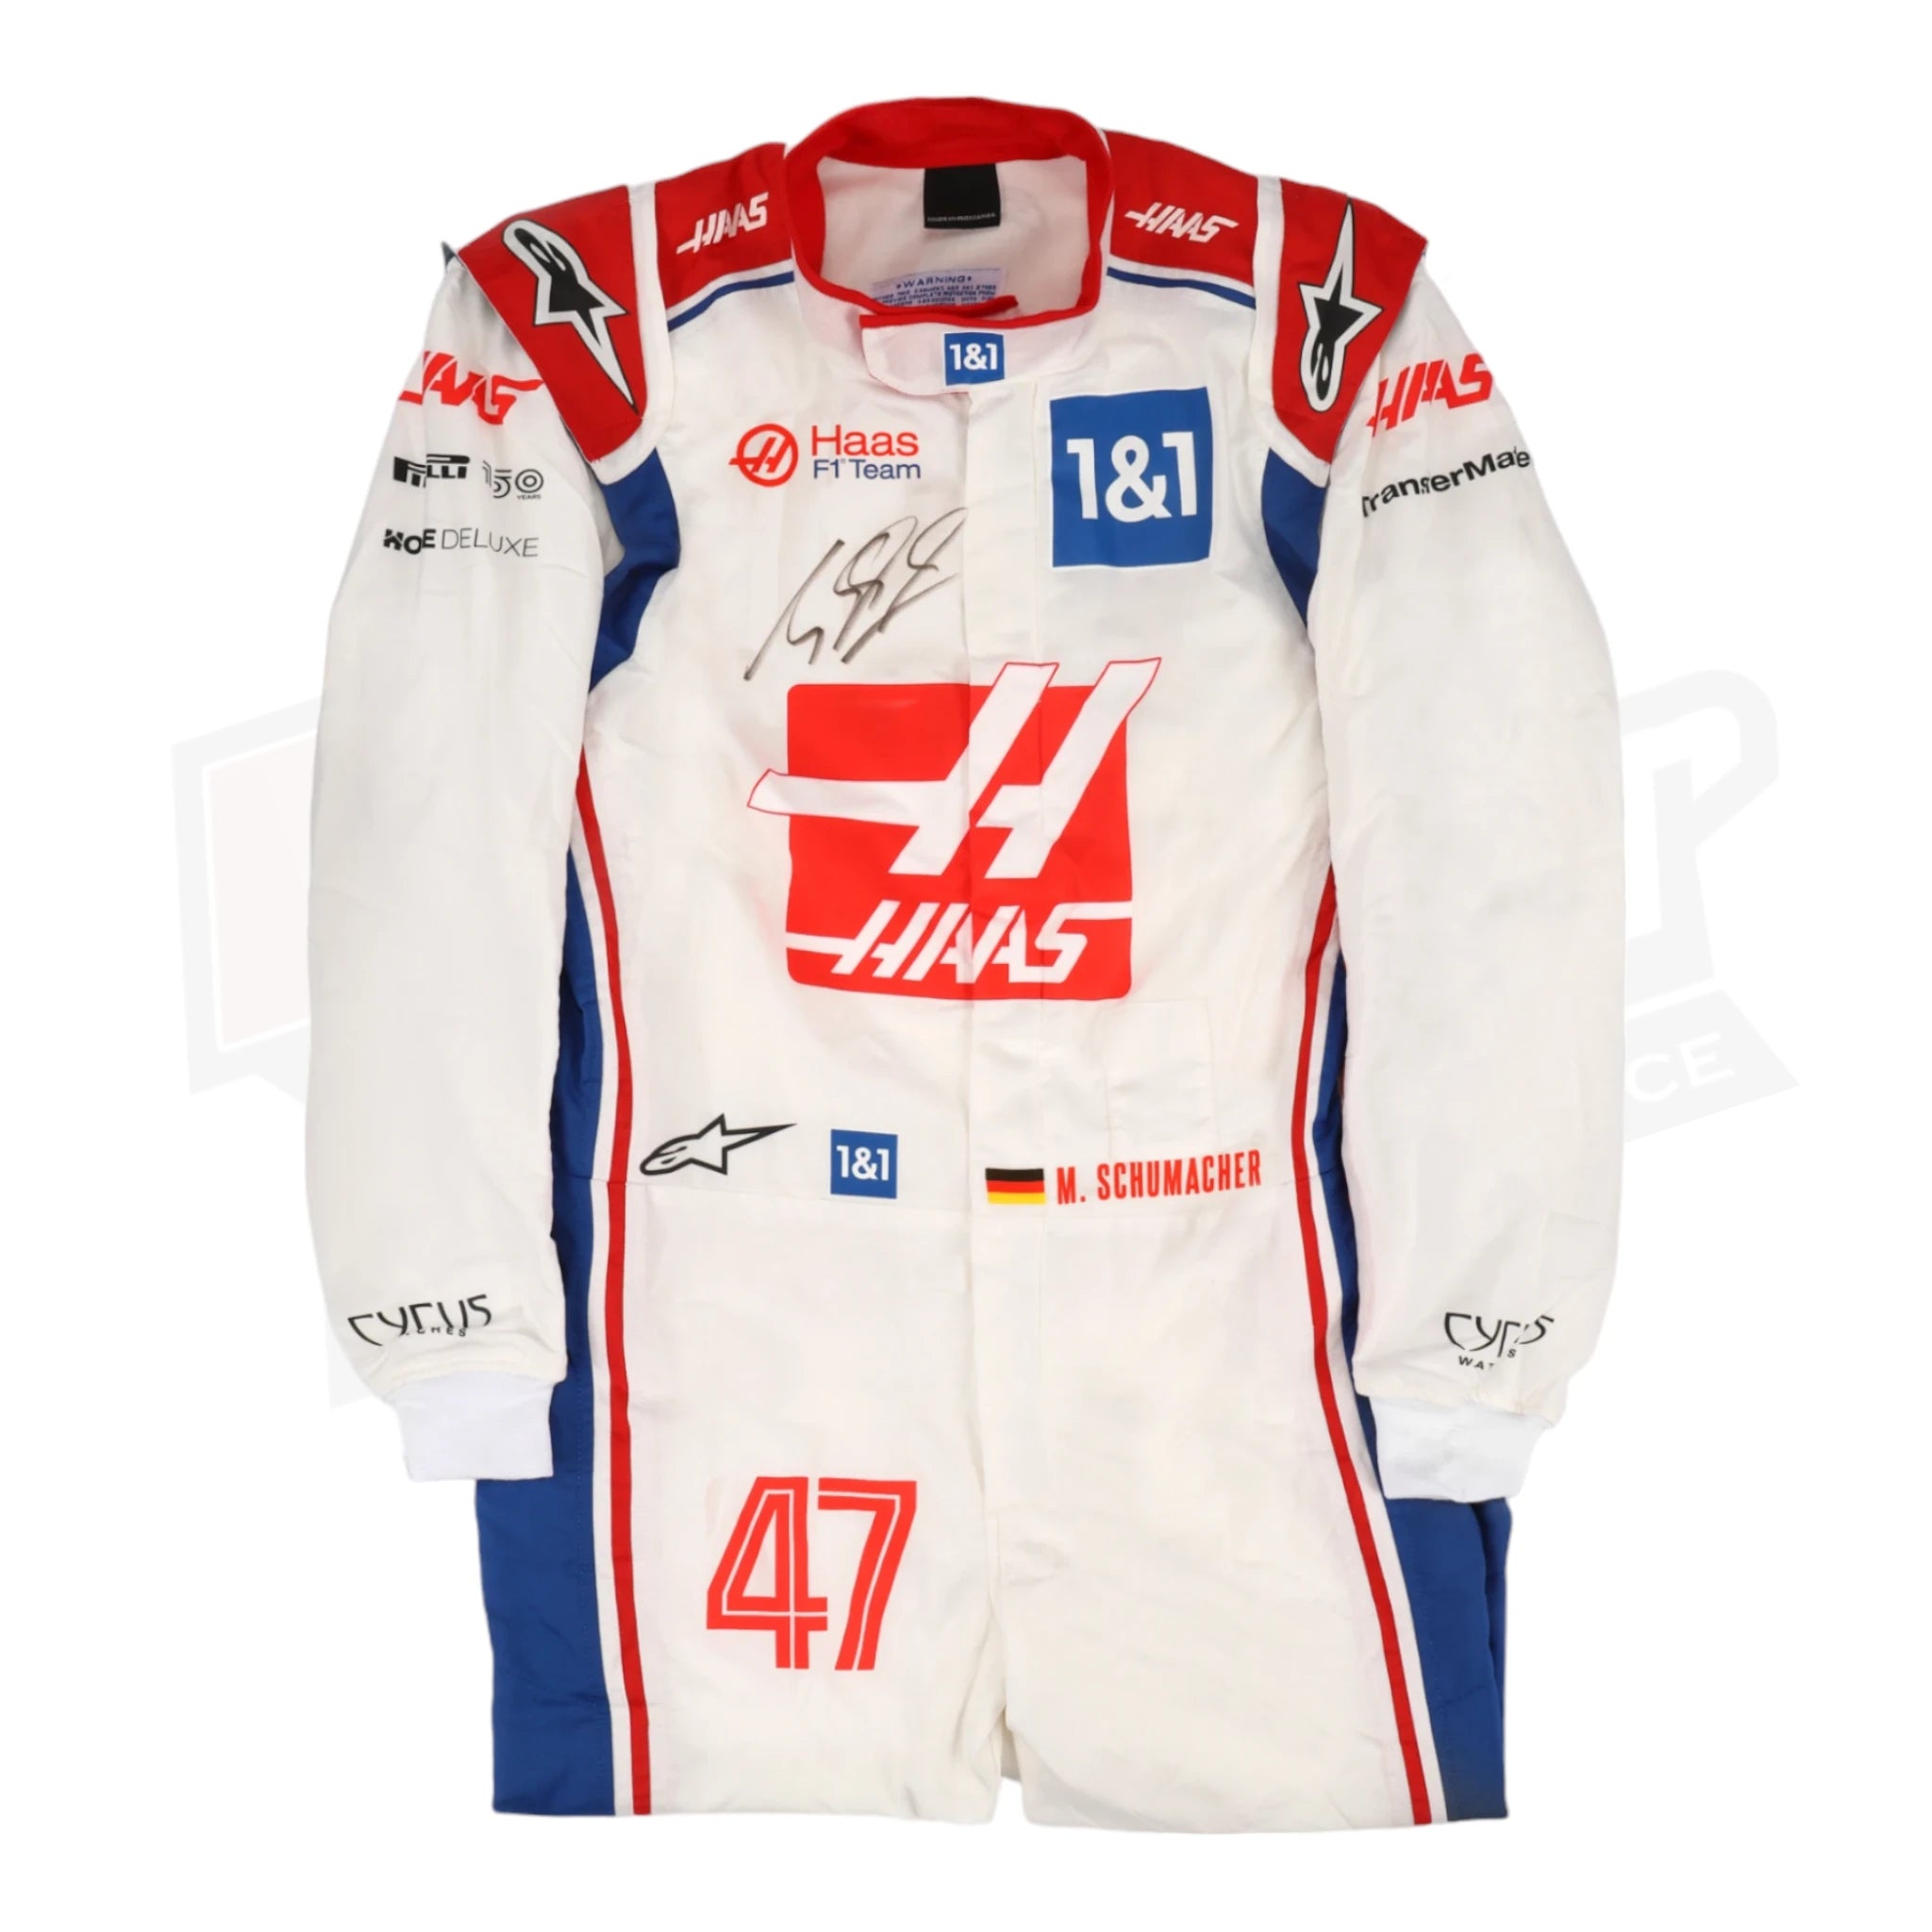 2022 Mick Schumacher Haas F1 Team Replica Race Suit